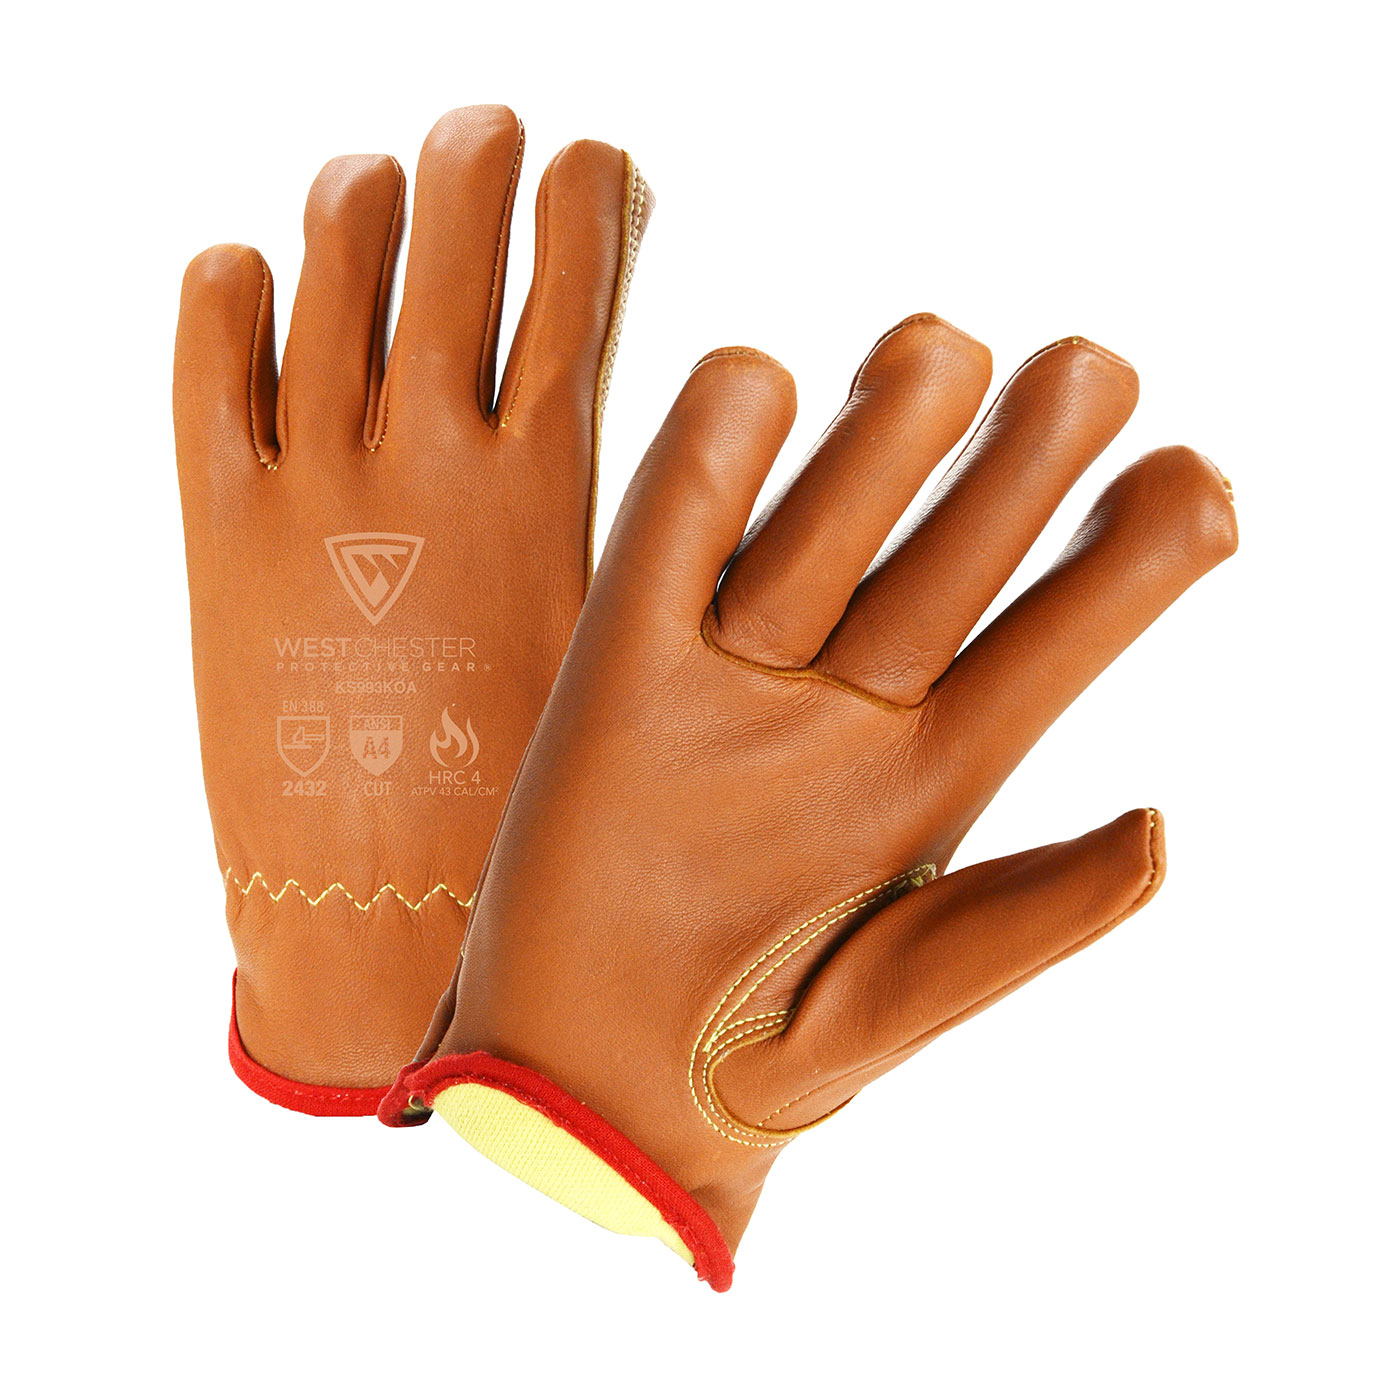 KS993KOA PIP® Top Grain Goatskin Leather Drivers Glove with Para-Aramid Lining and Keystone Thumb feature Oil Armor™